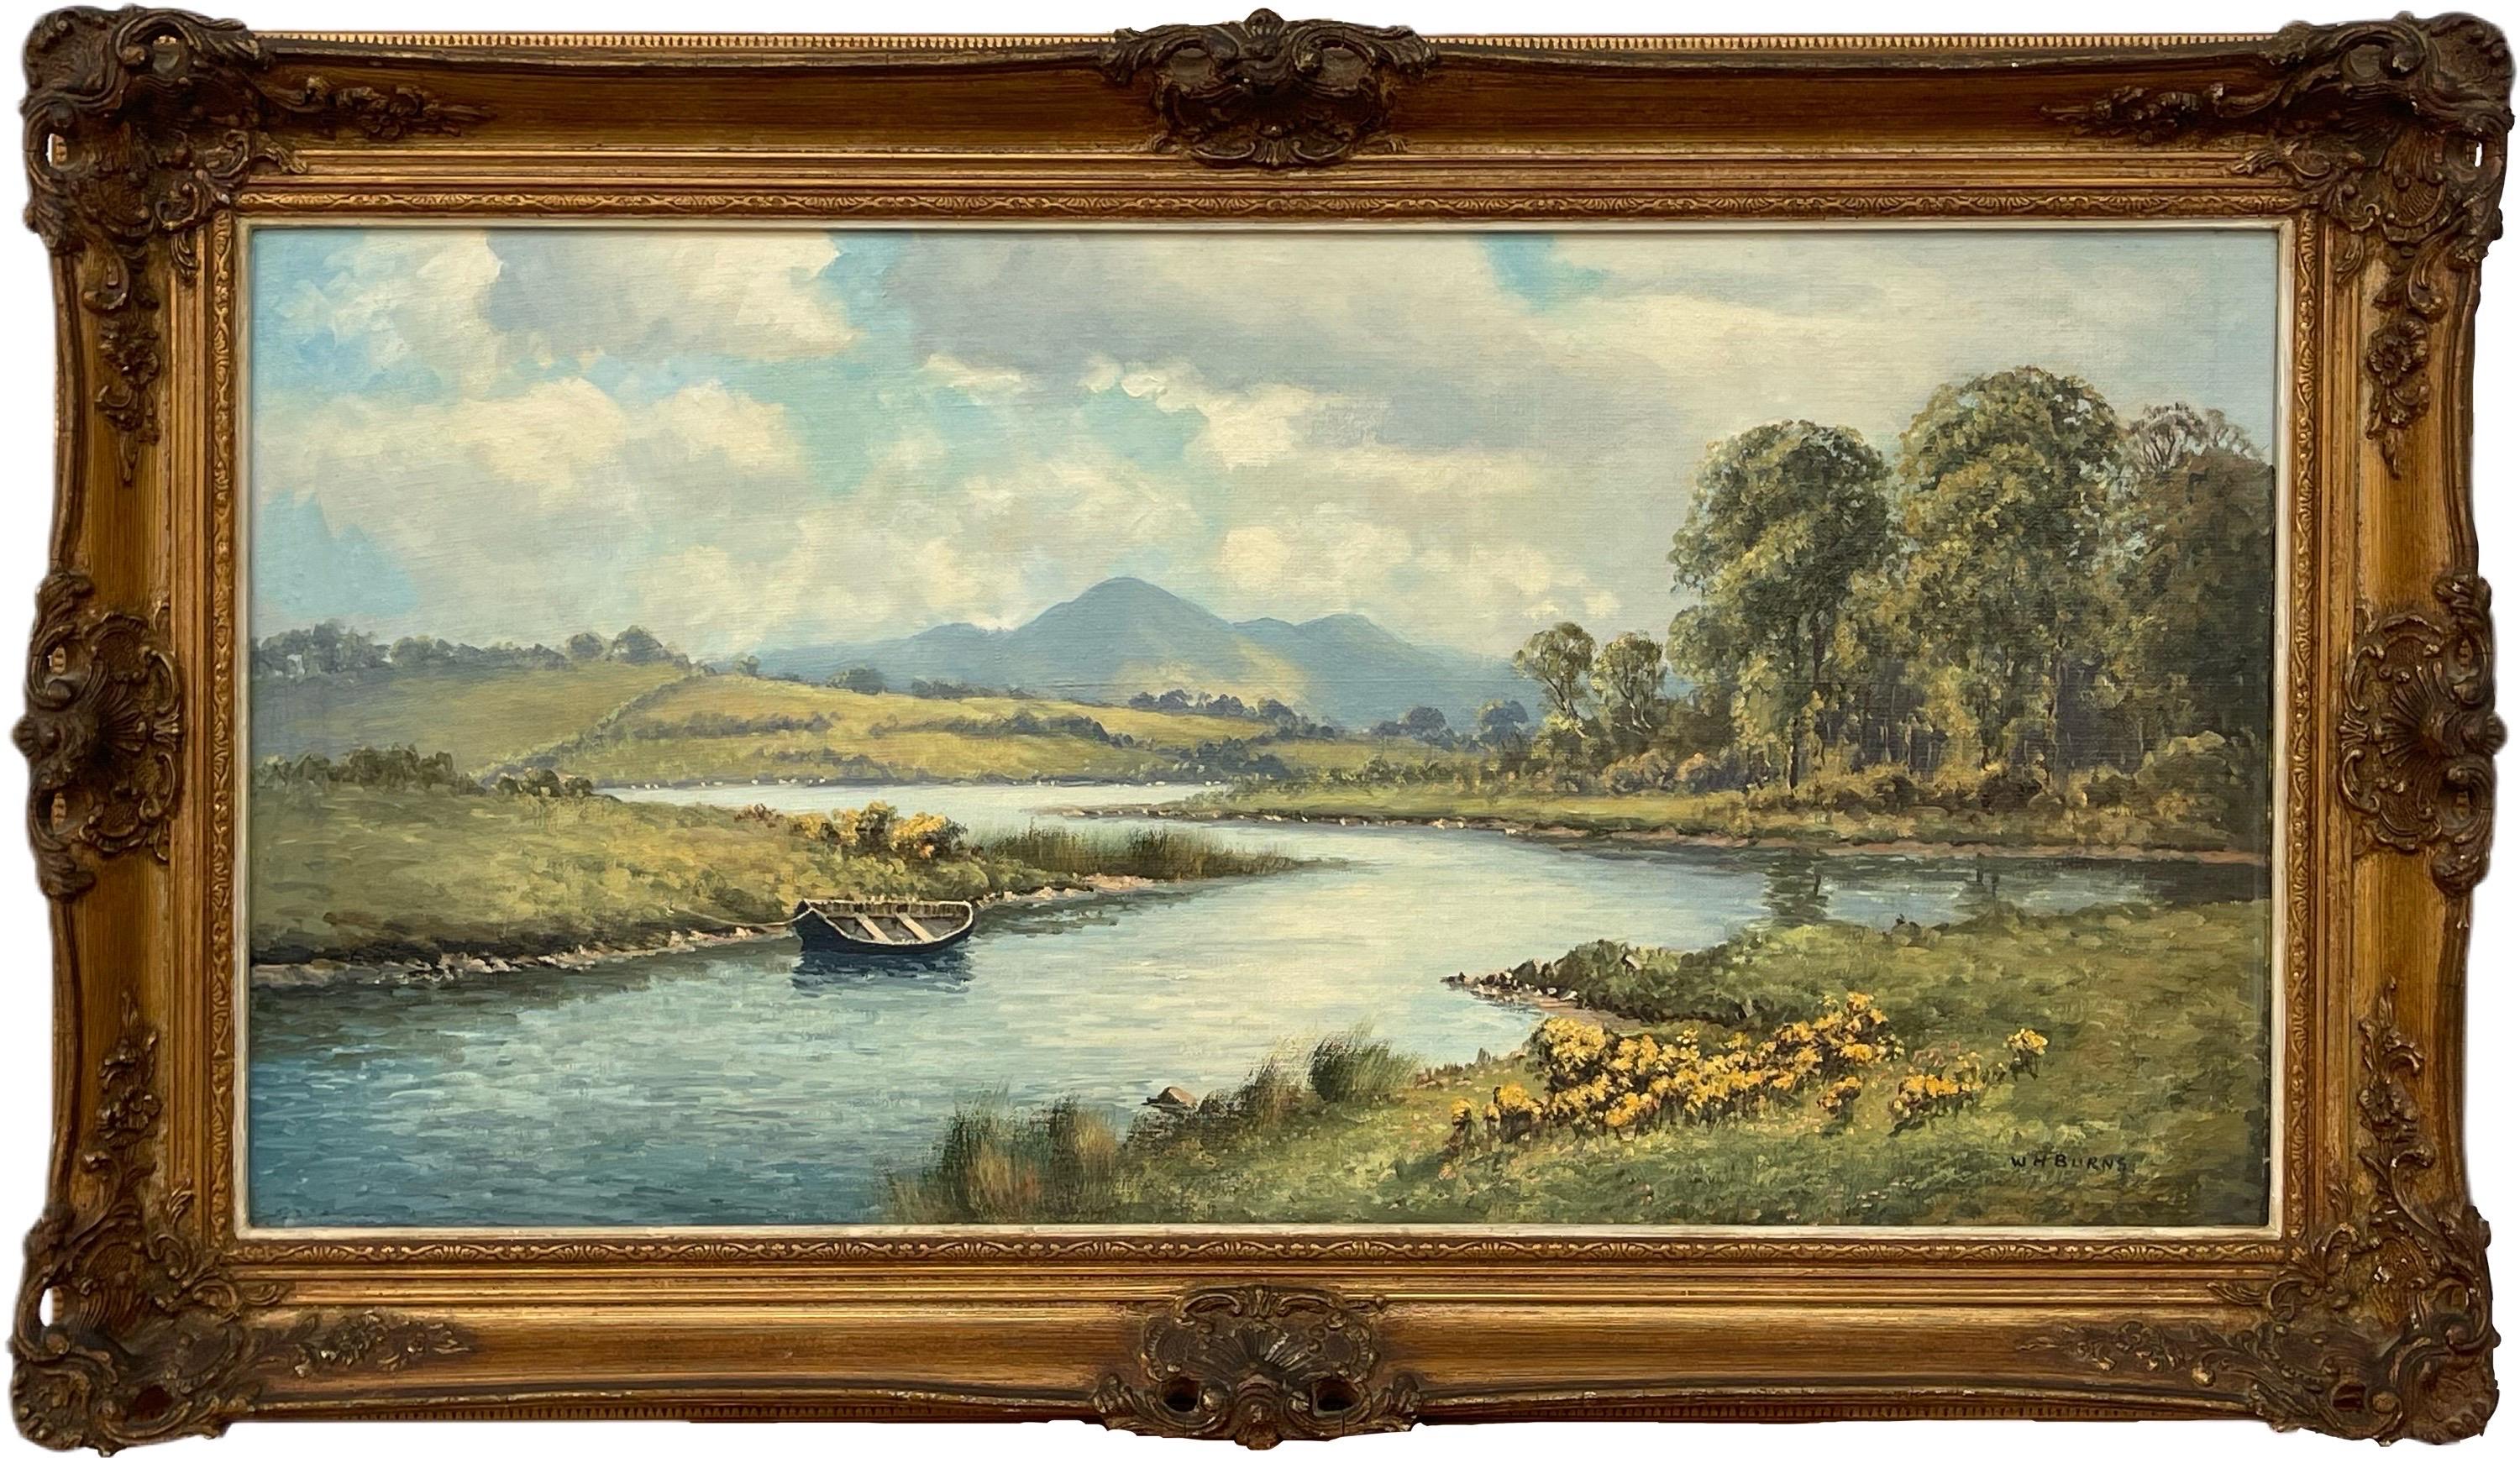 William Henry Burns Landscape Painting - Original Oil Painting of Mountain River Scene in Ireland by Modern Irish Artist